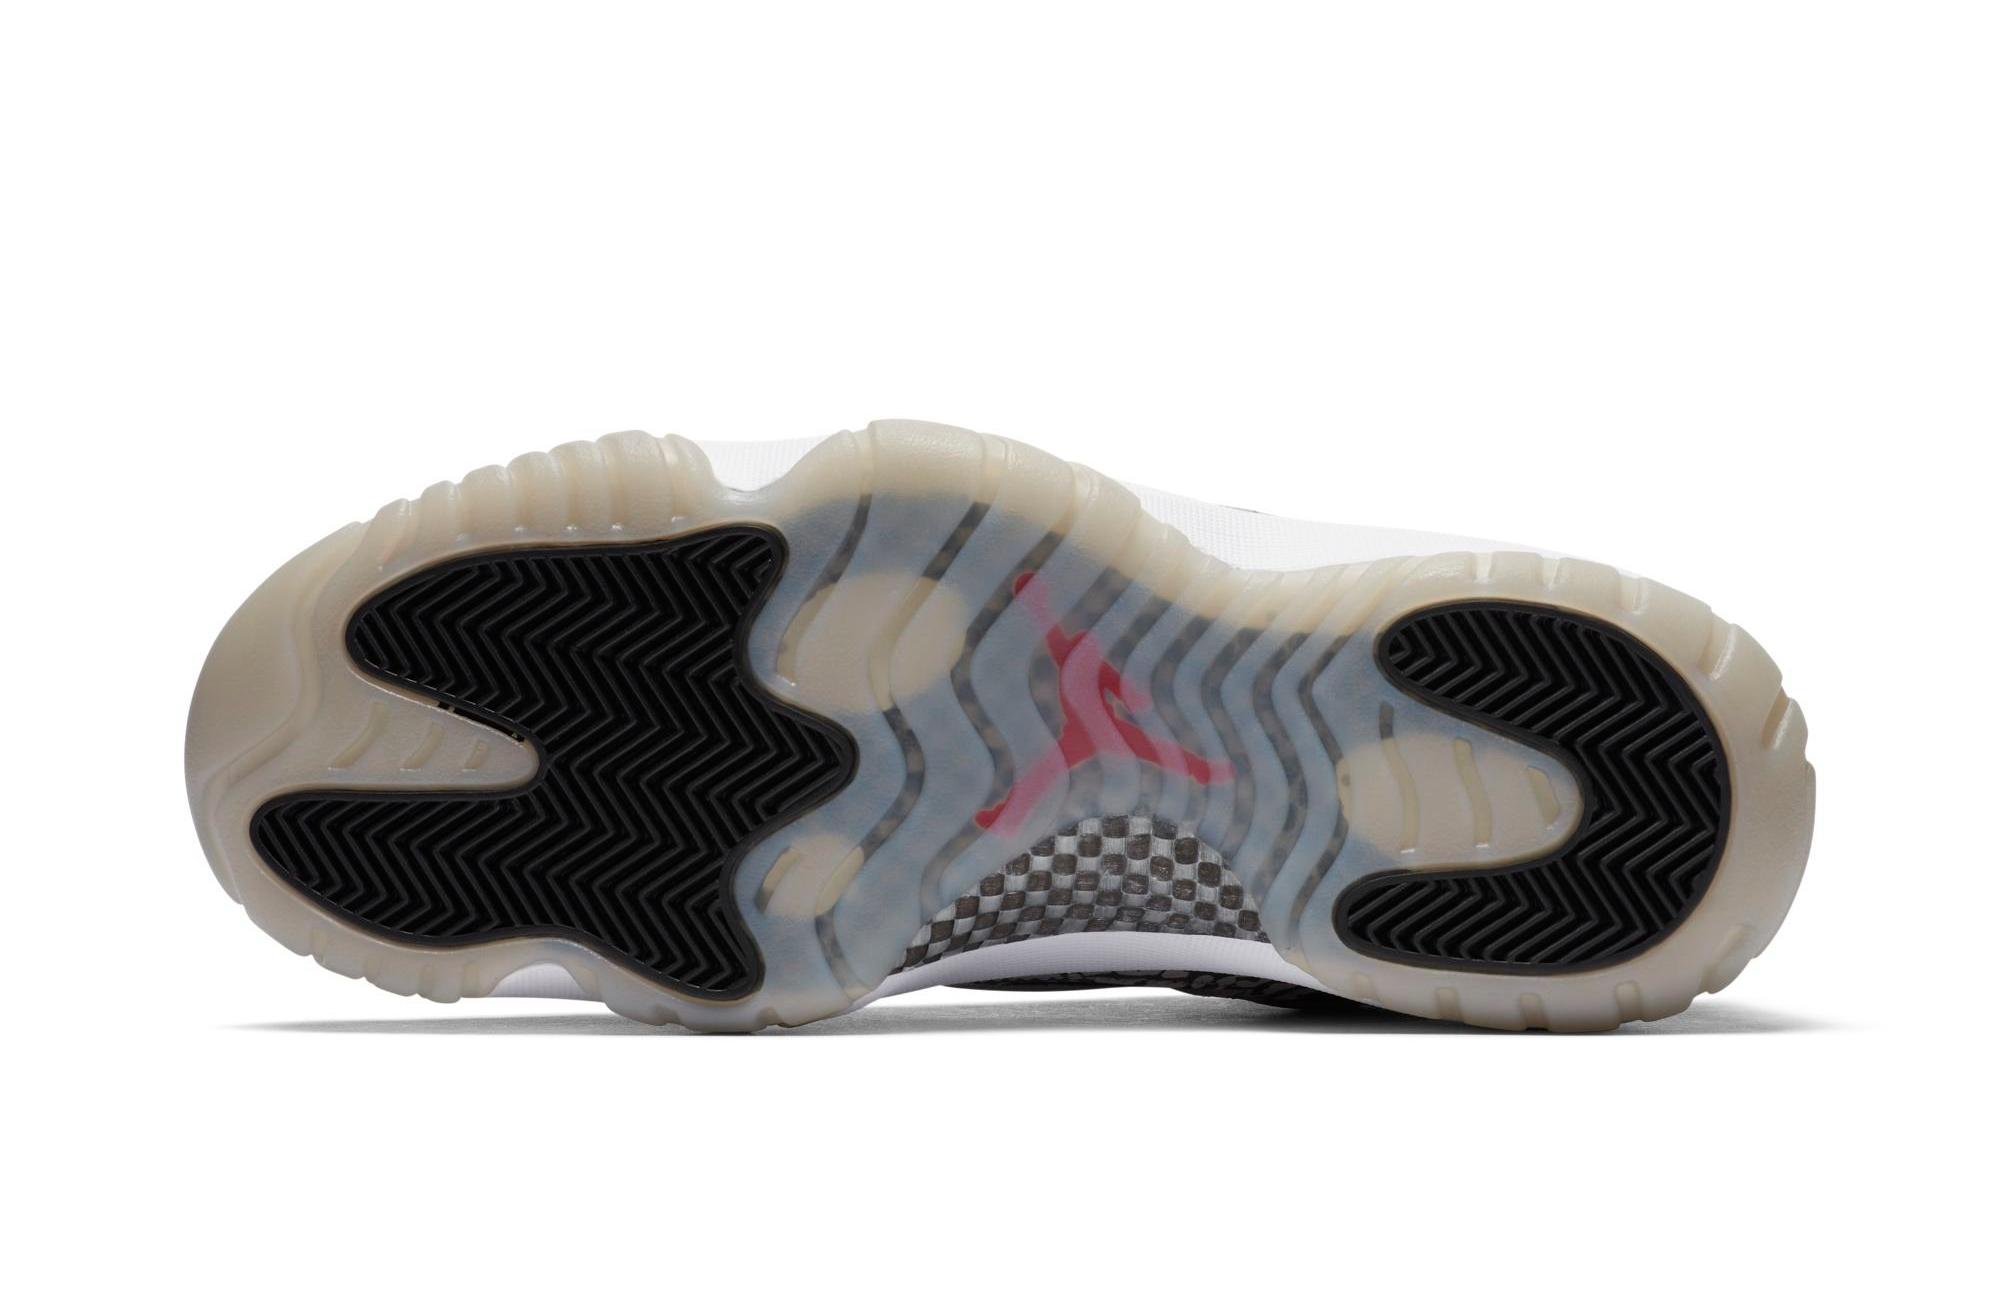 Sneakers Release – Jordan 11 Retro Low IE “Black Cement” Black/Fire Red ...